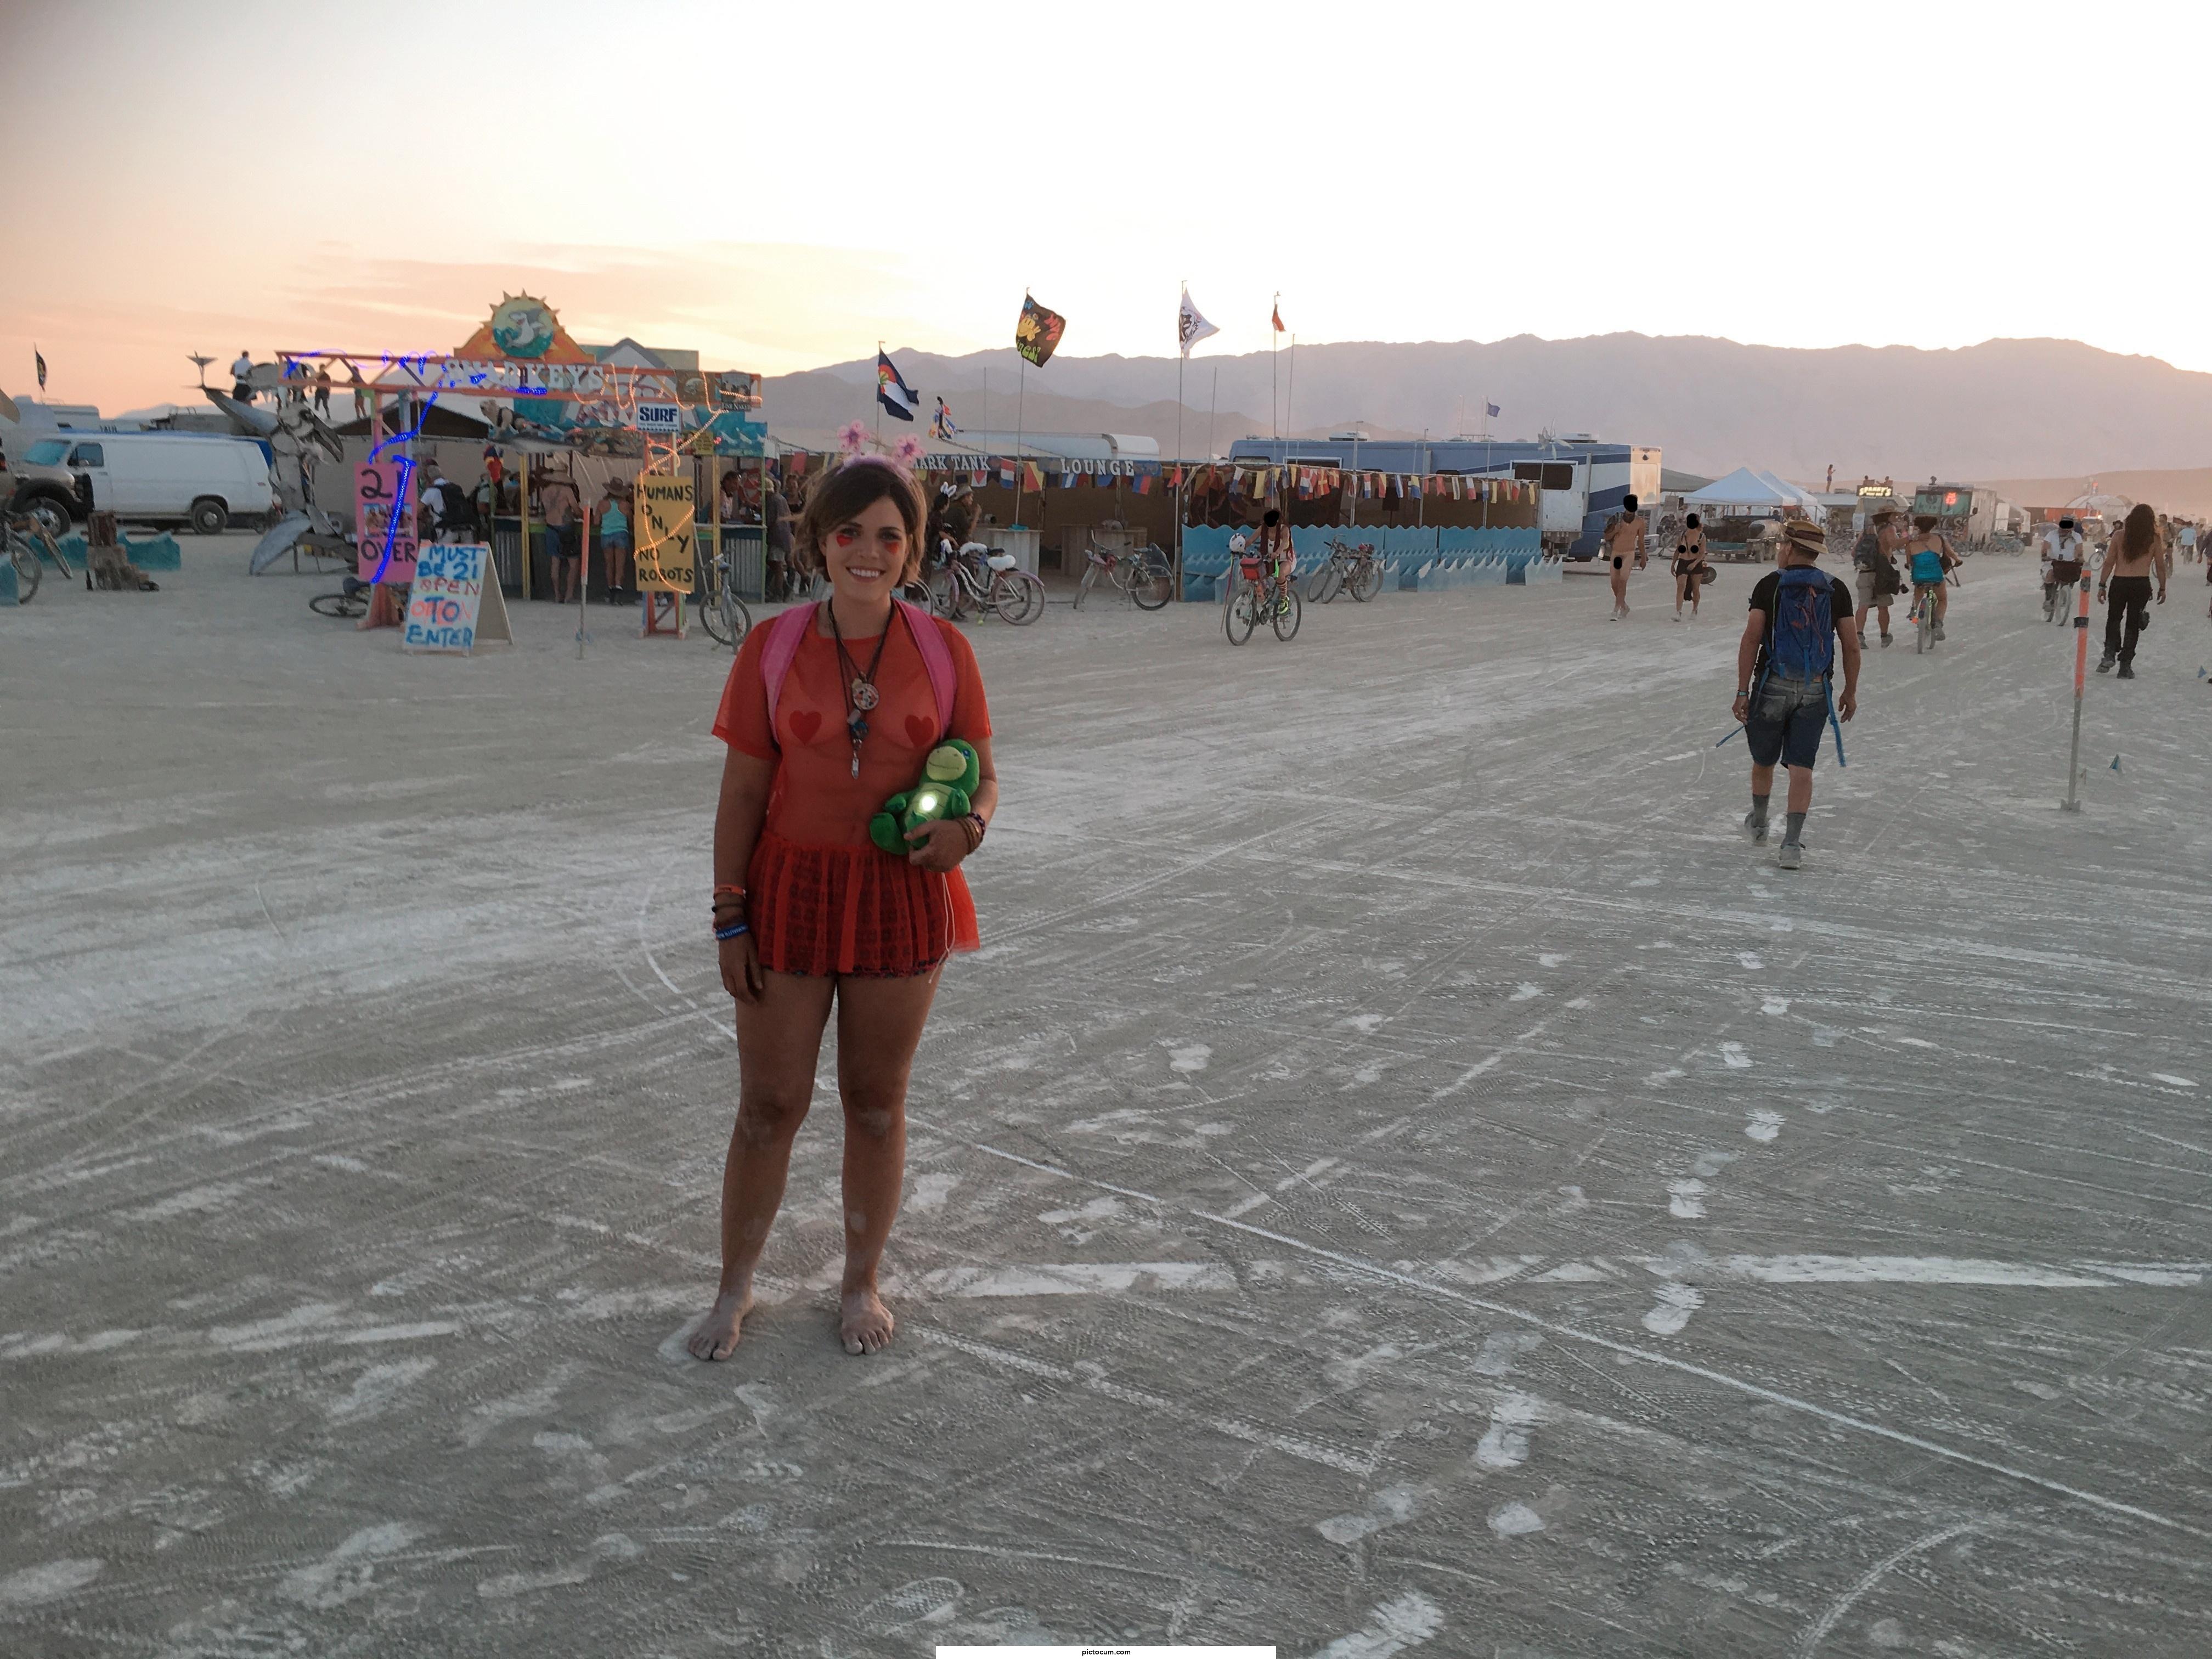 Just a dork at Burning Man